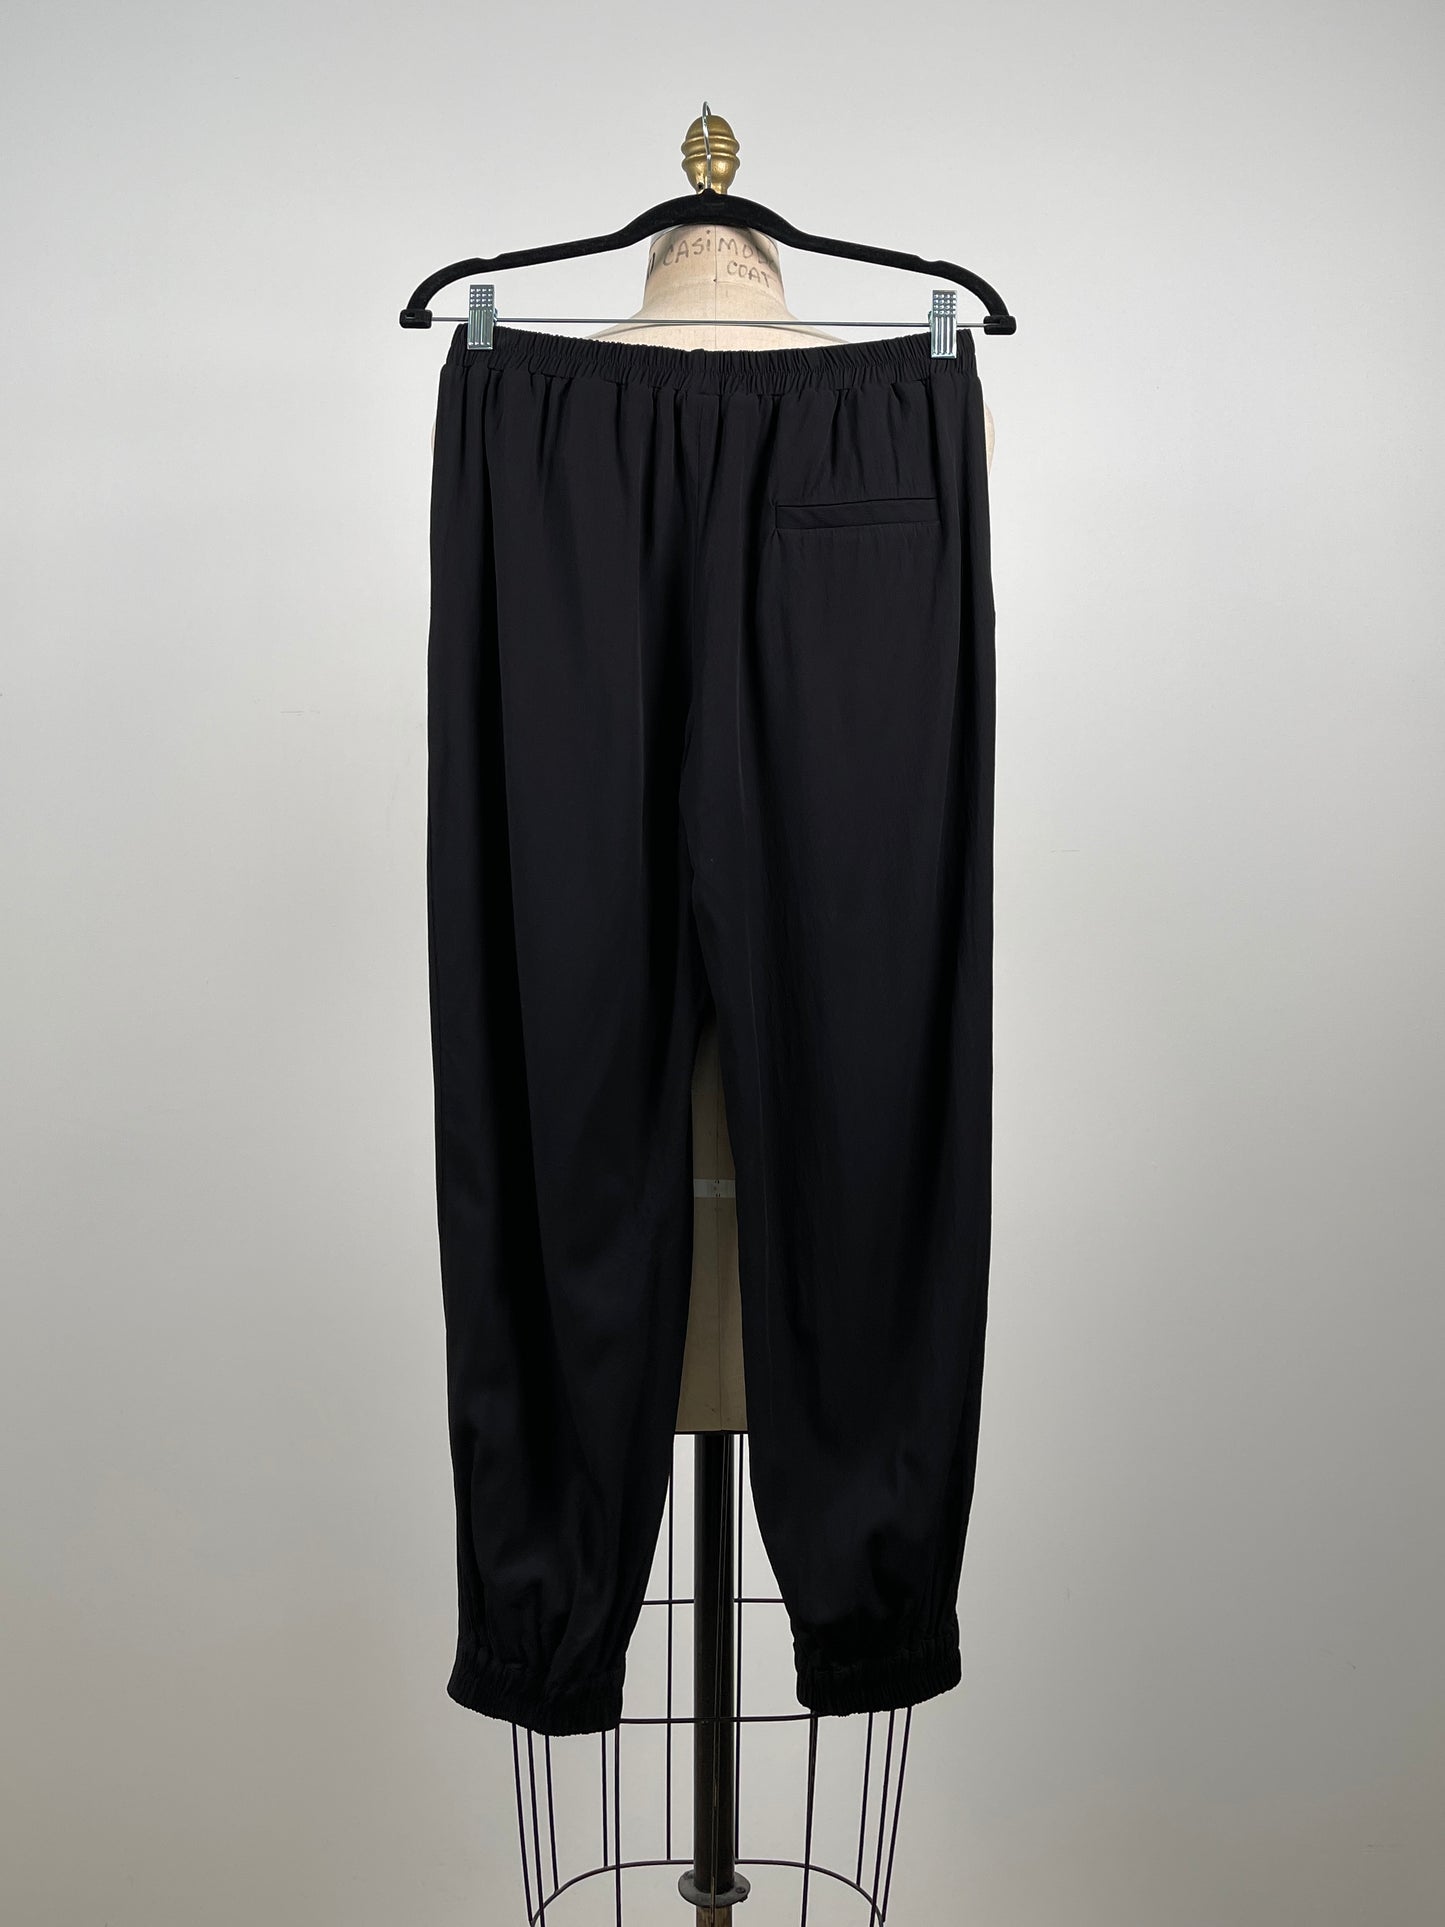 Pantalon jogger noir en tissage mat (XS)